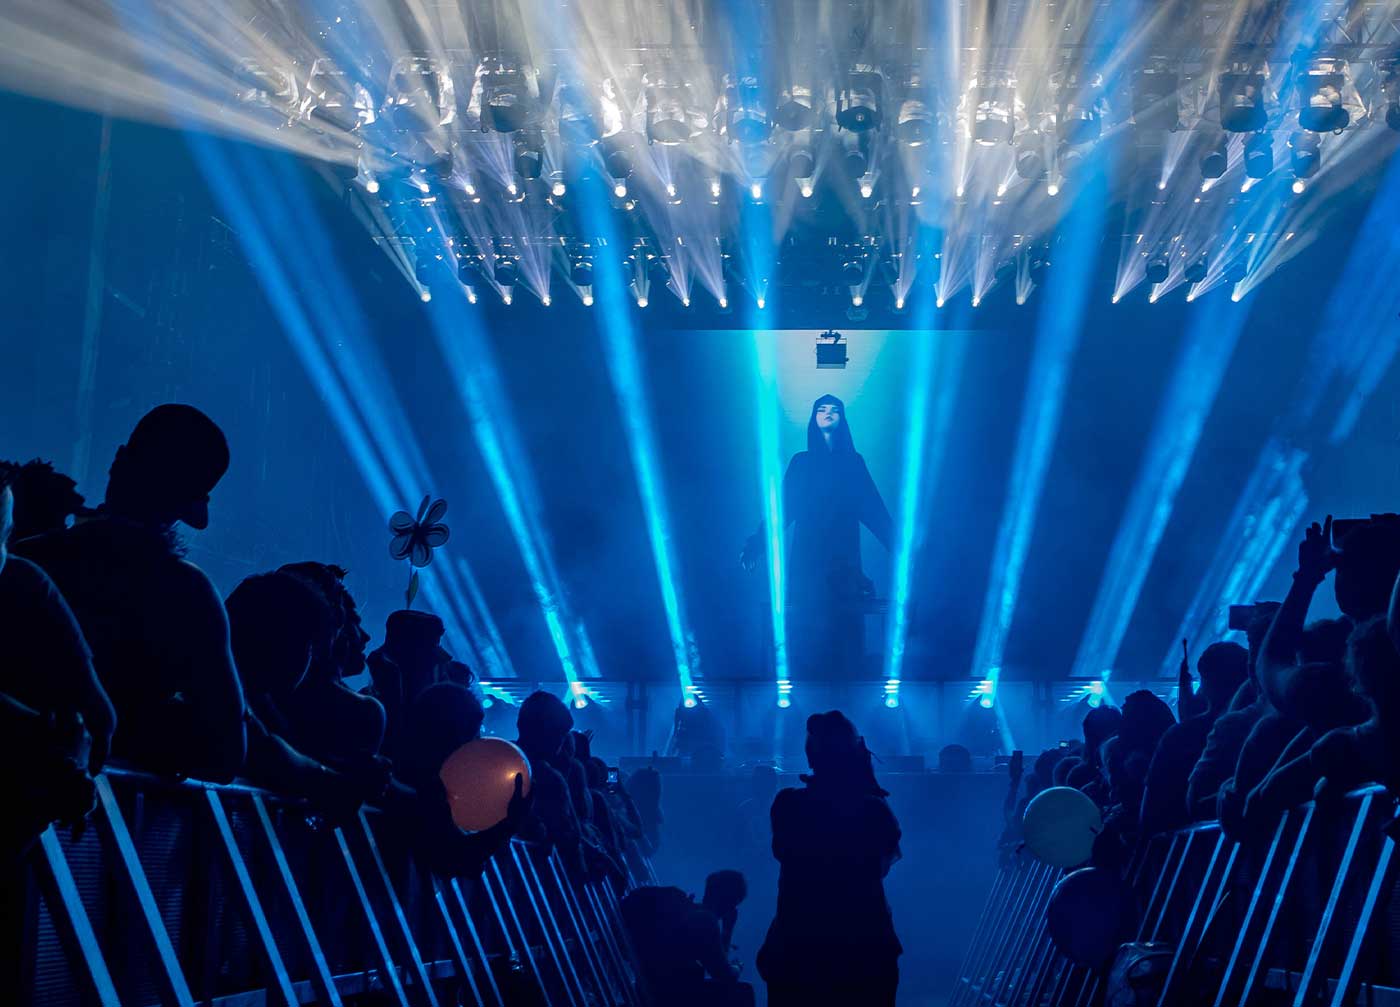 bonnaroo stage, artist, fans and blue lights